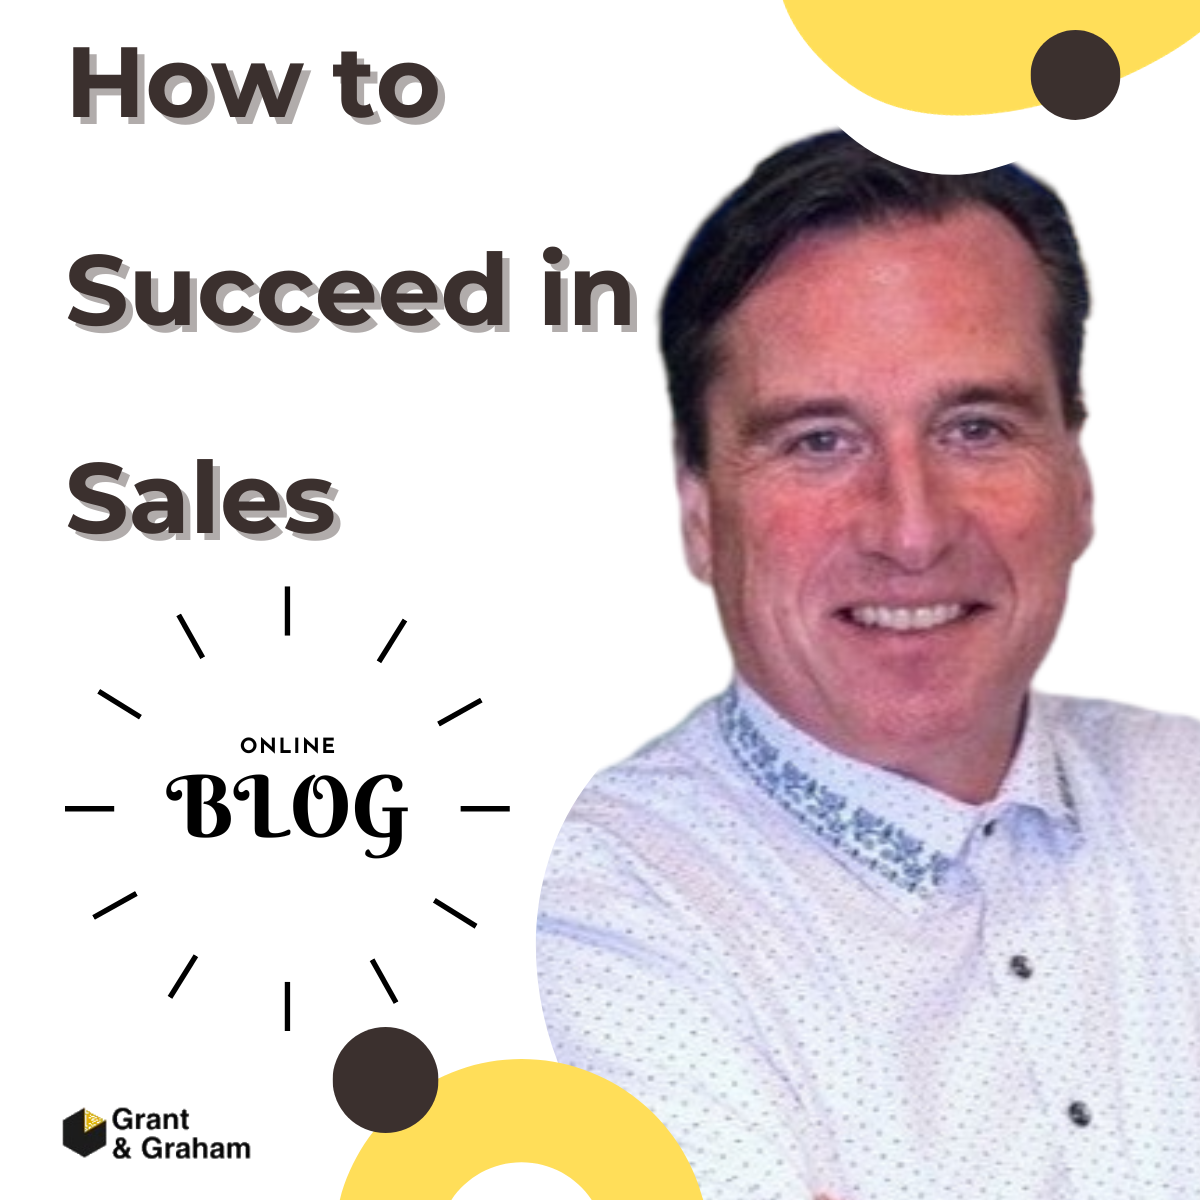 Success in sales